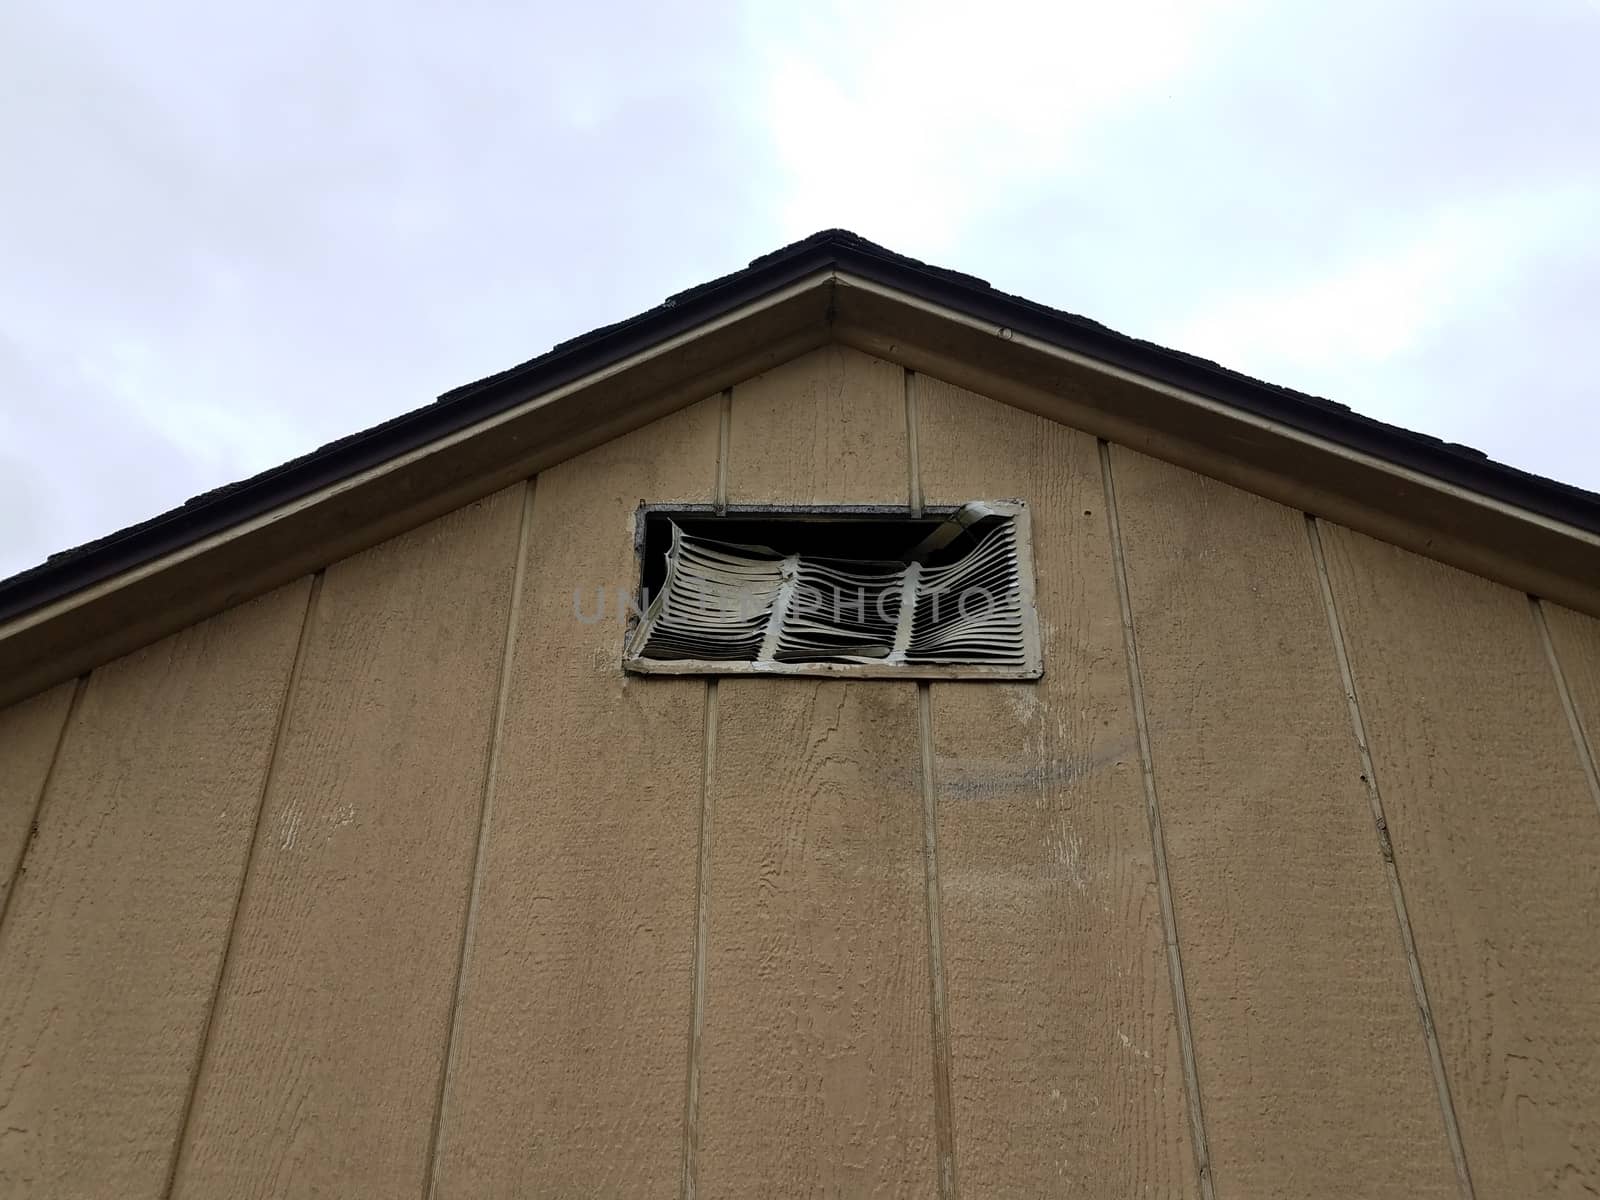 brown storage shed building with damaged or broken metal vent